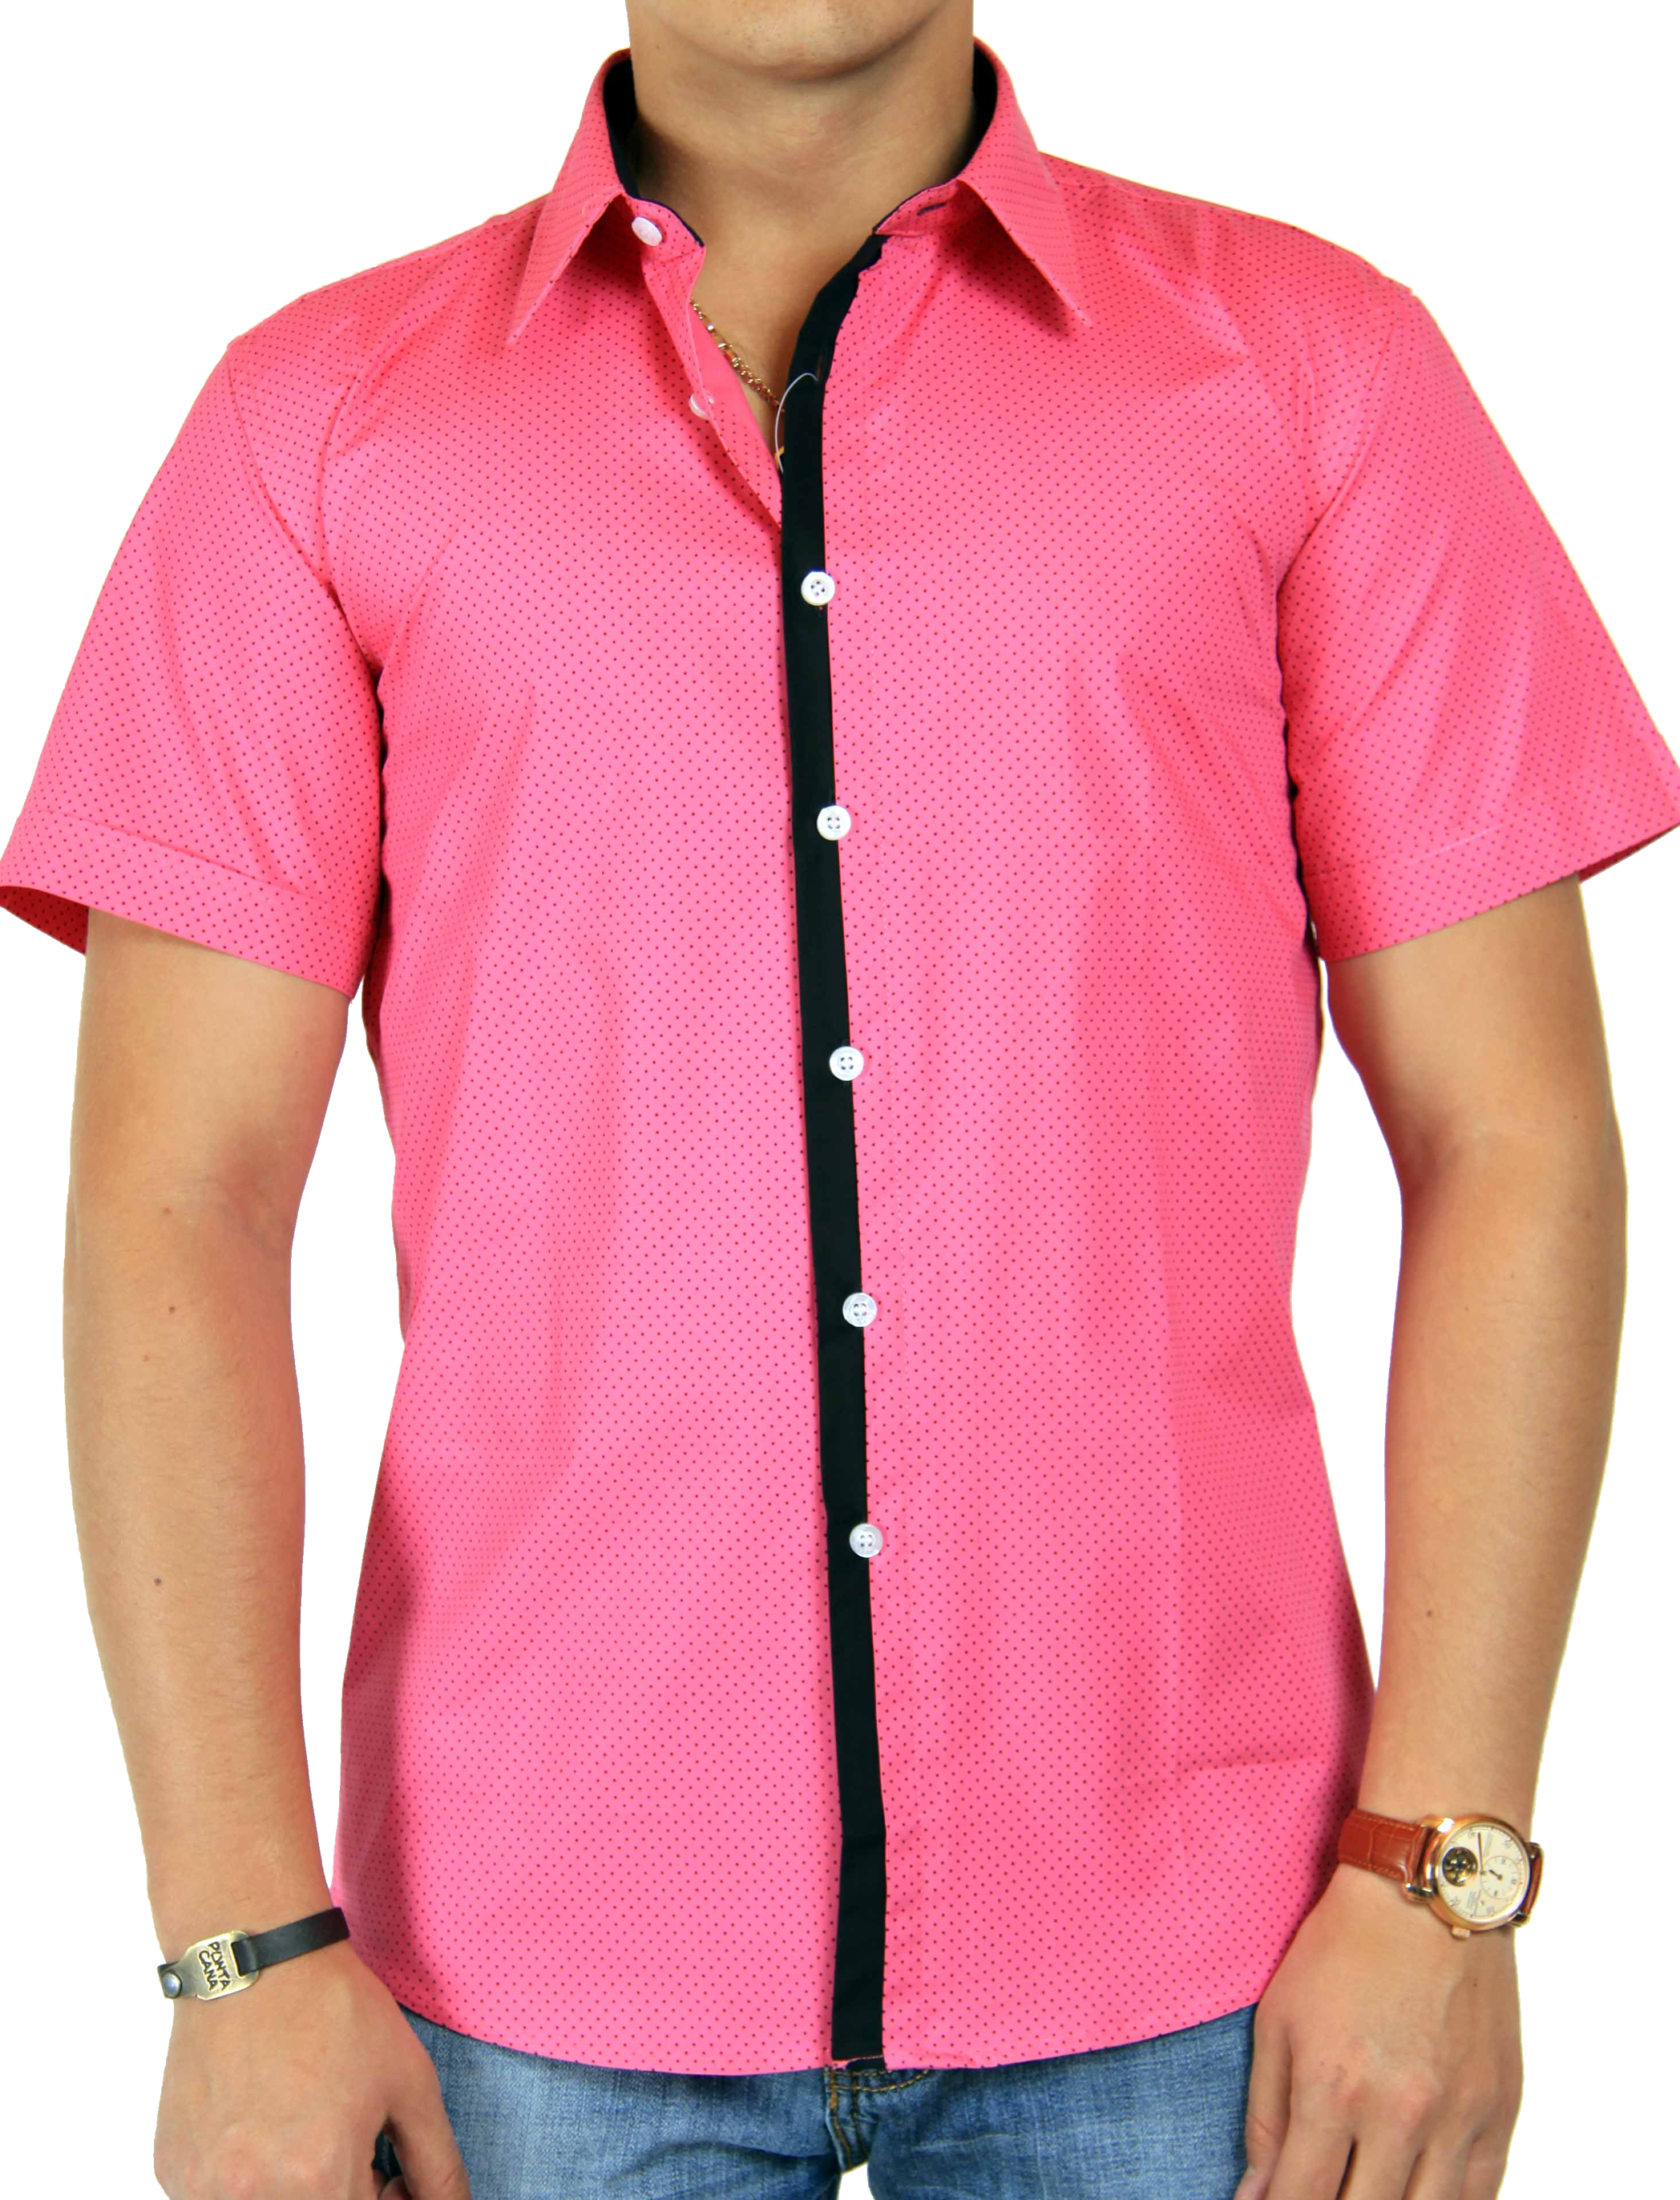 Shirt clipart pink shirt, Shirt pink shirt Transparent FREE for ...